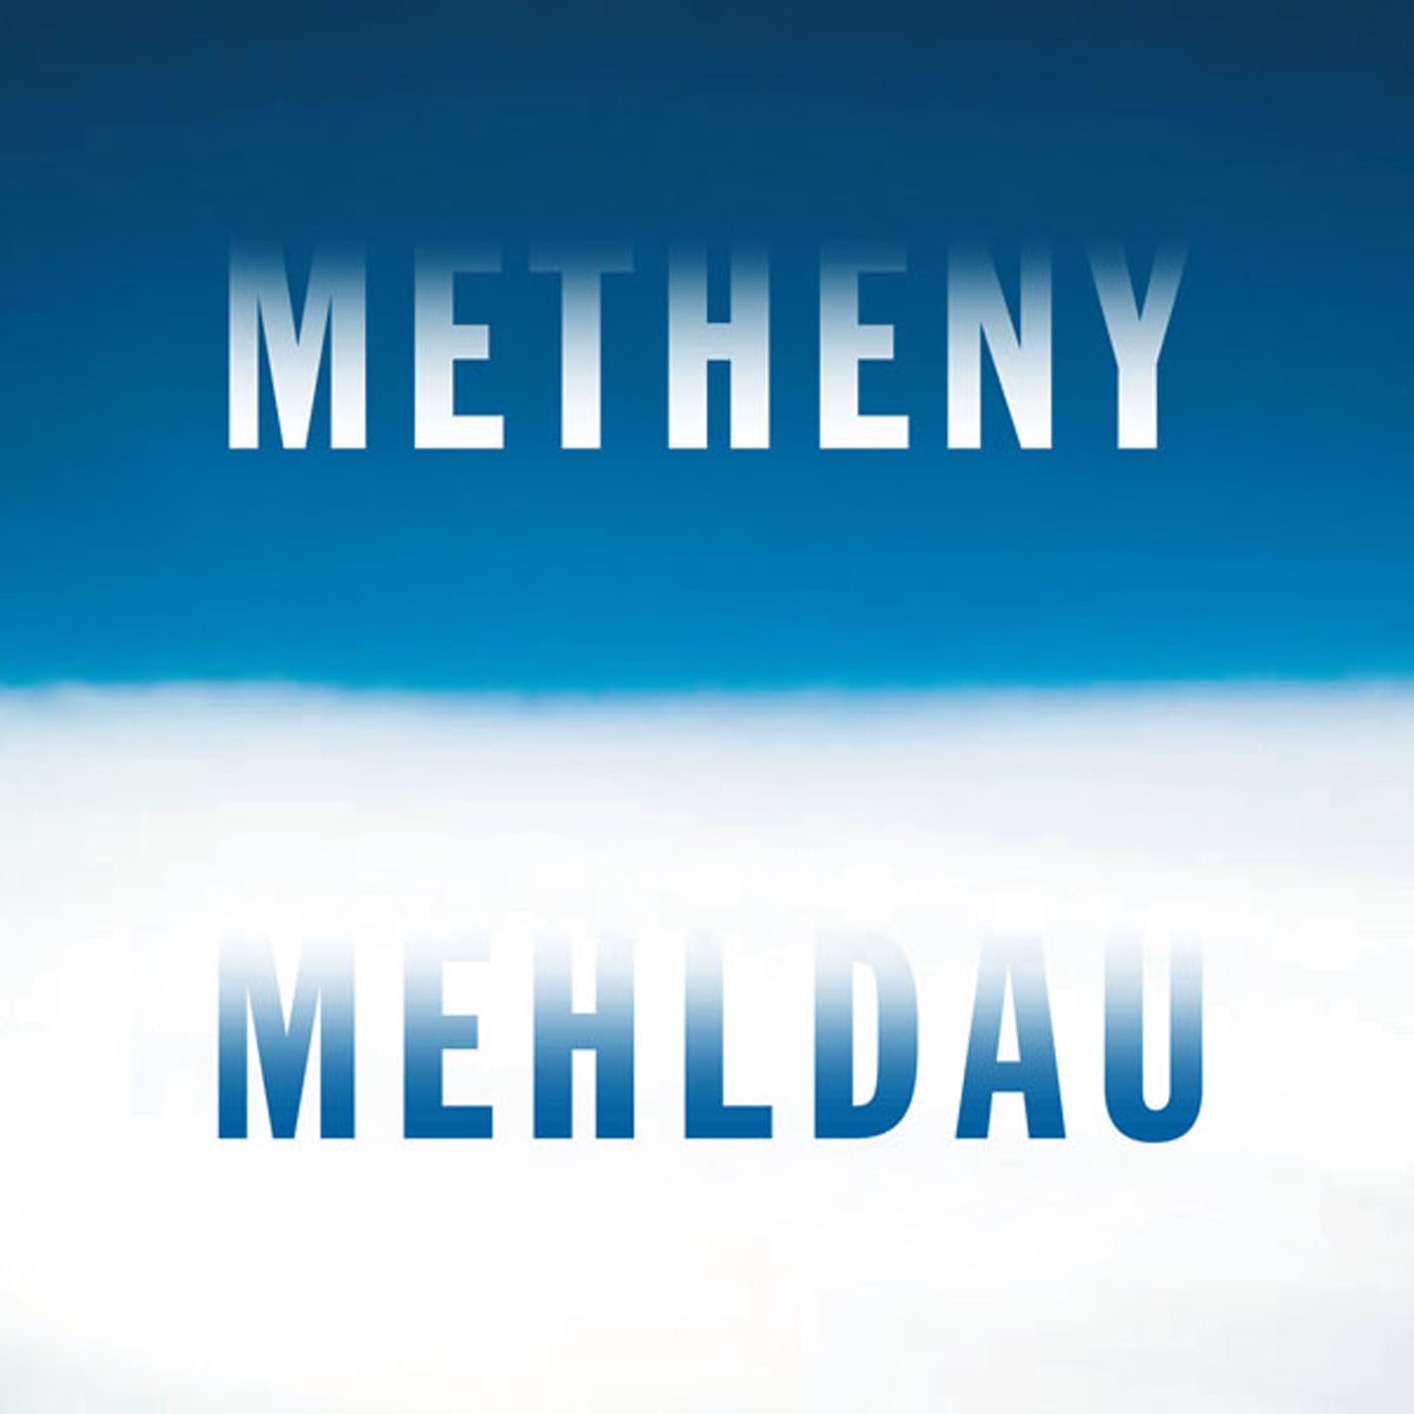 Pat Metheny/Brad Mehldau - Metheny Mehldau (2006/2018) [FLAC 24bit/96kHz]